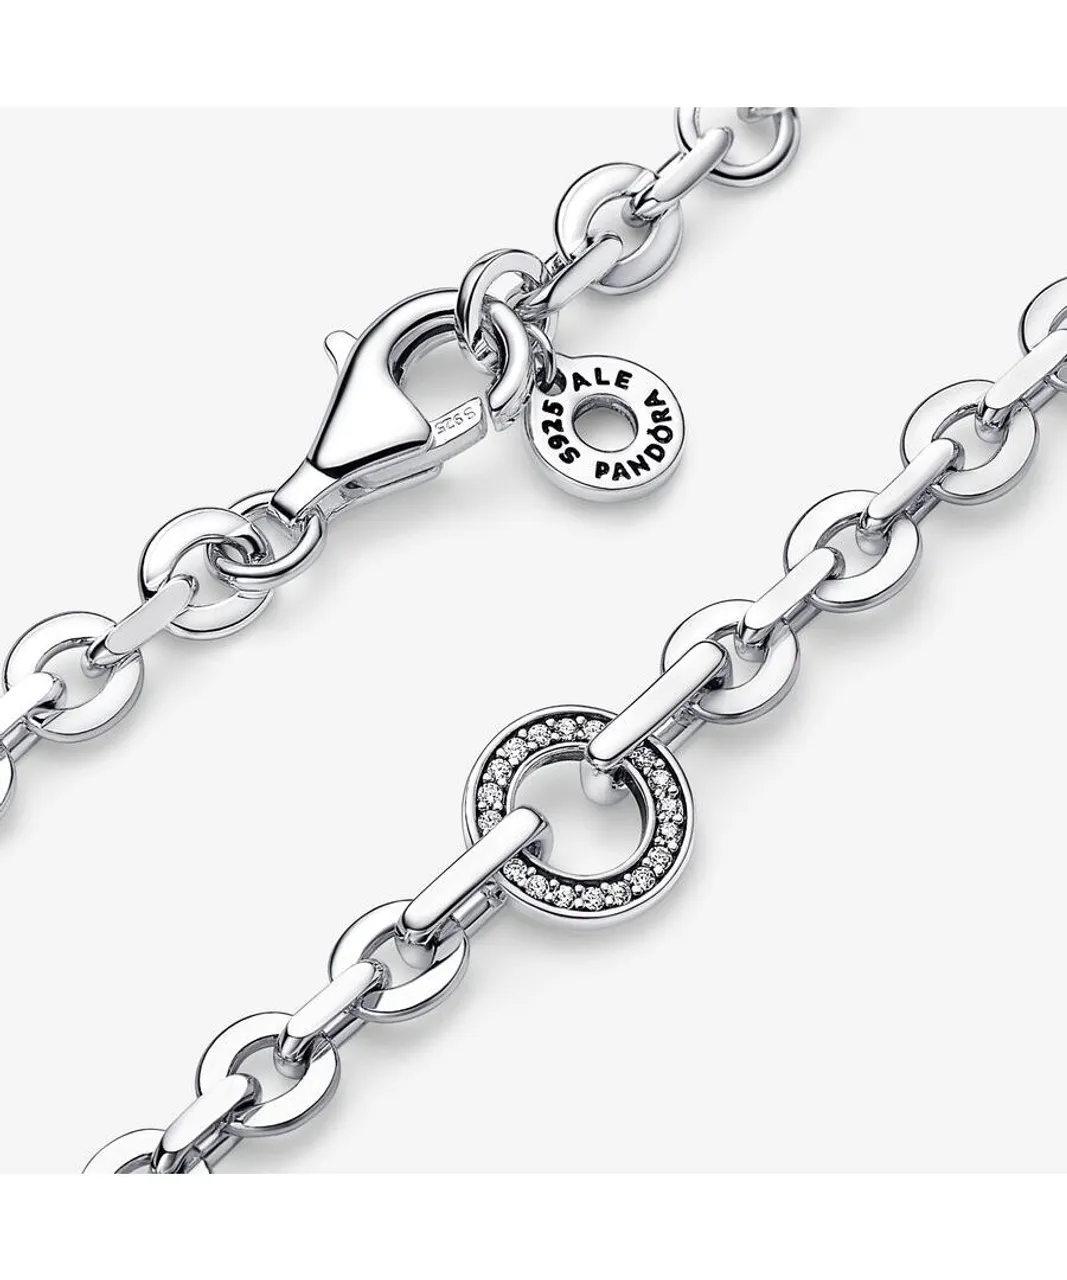 Pandora 'Signature Pavé' WoMens 925 Sterling Silver Bracelet - 592777C01-20 - One Size